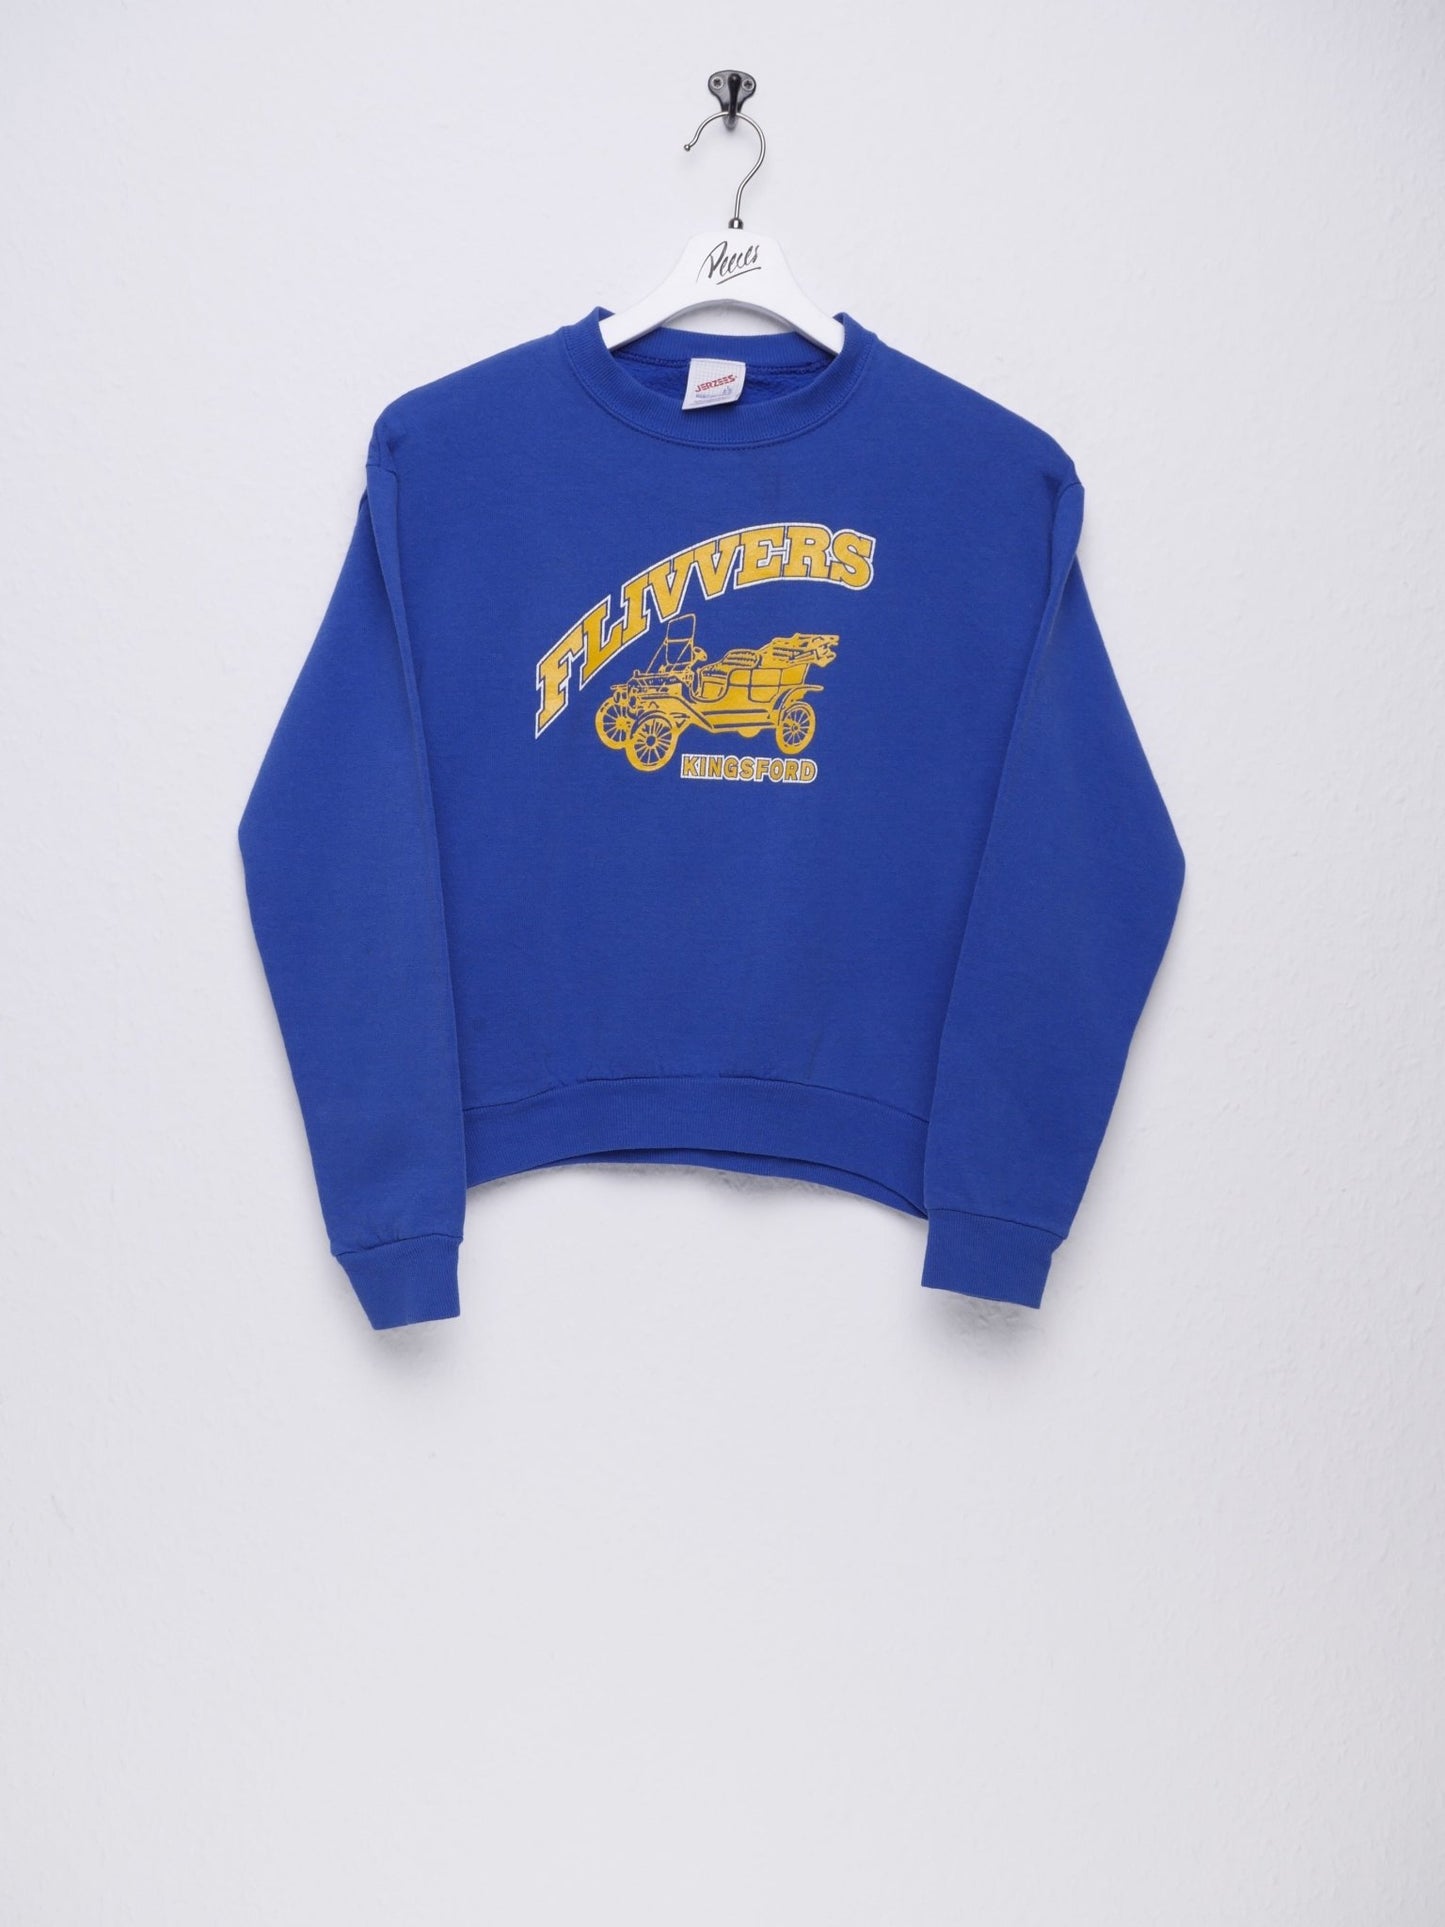 jerzees Flivvers Kingsport printed Logo Sweater - Peeces